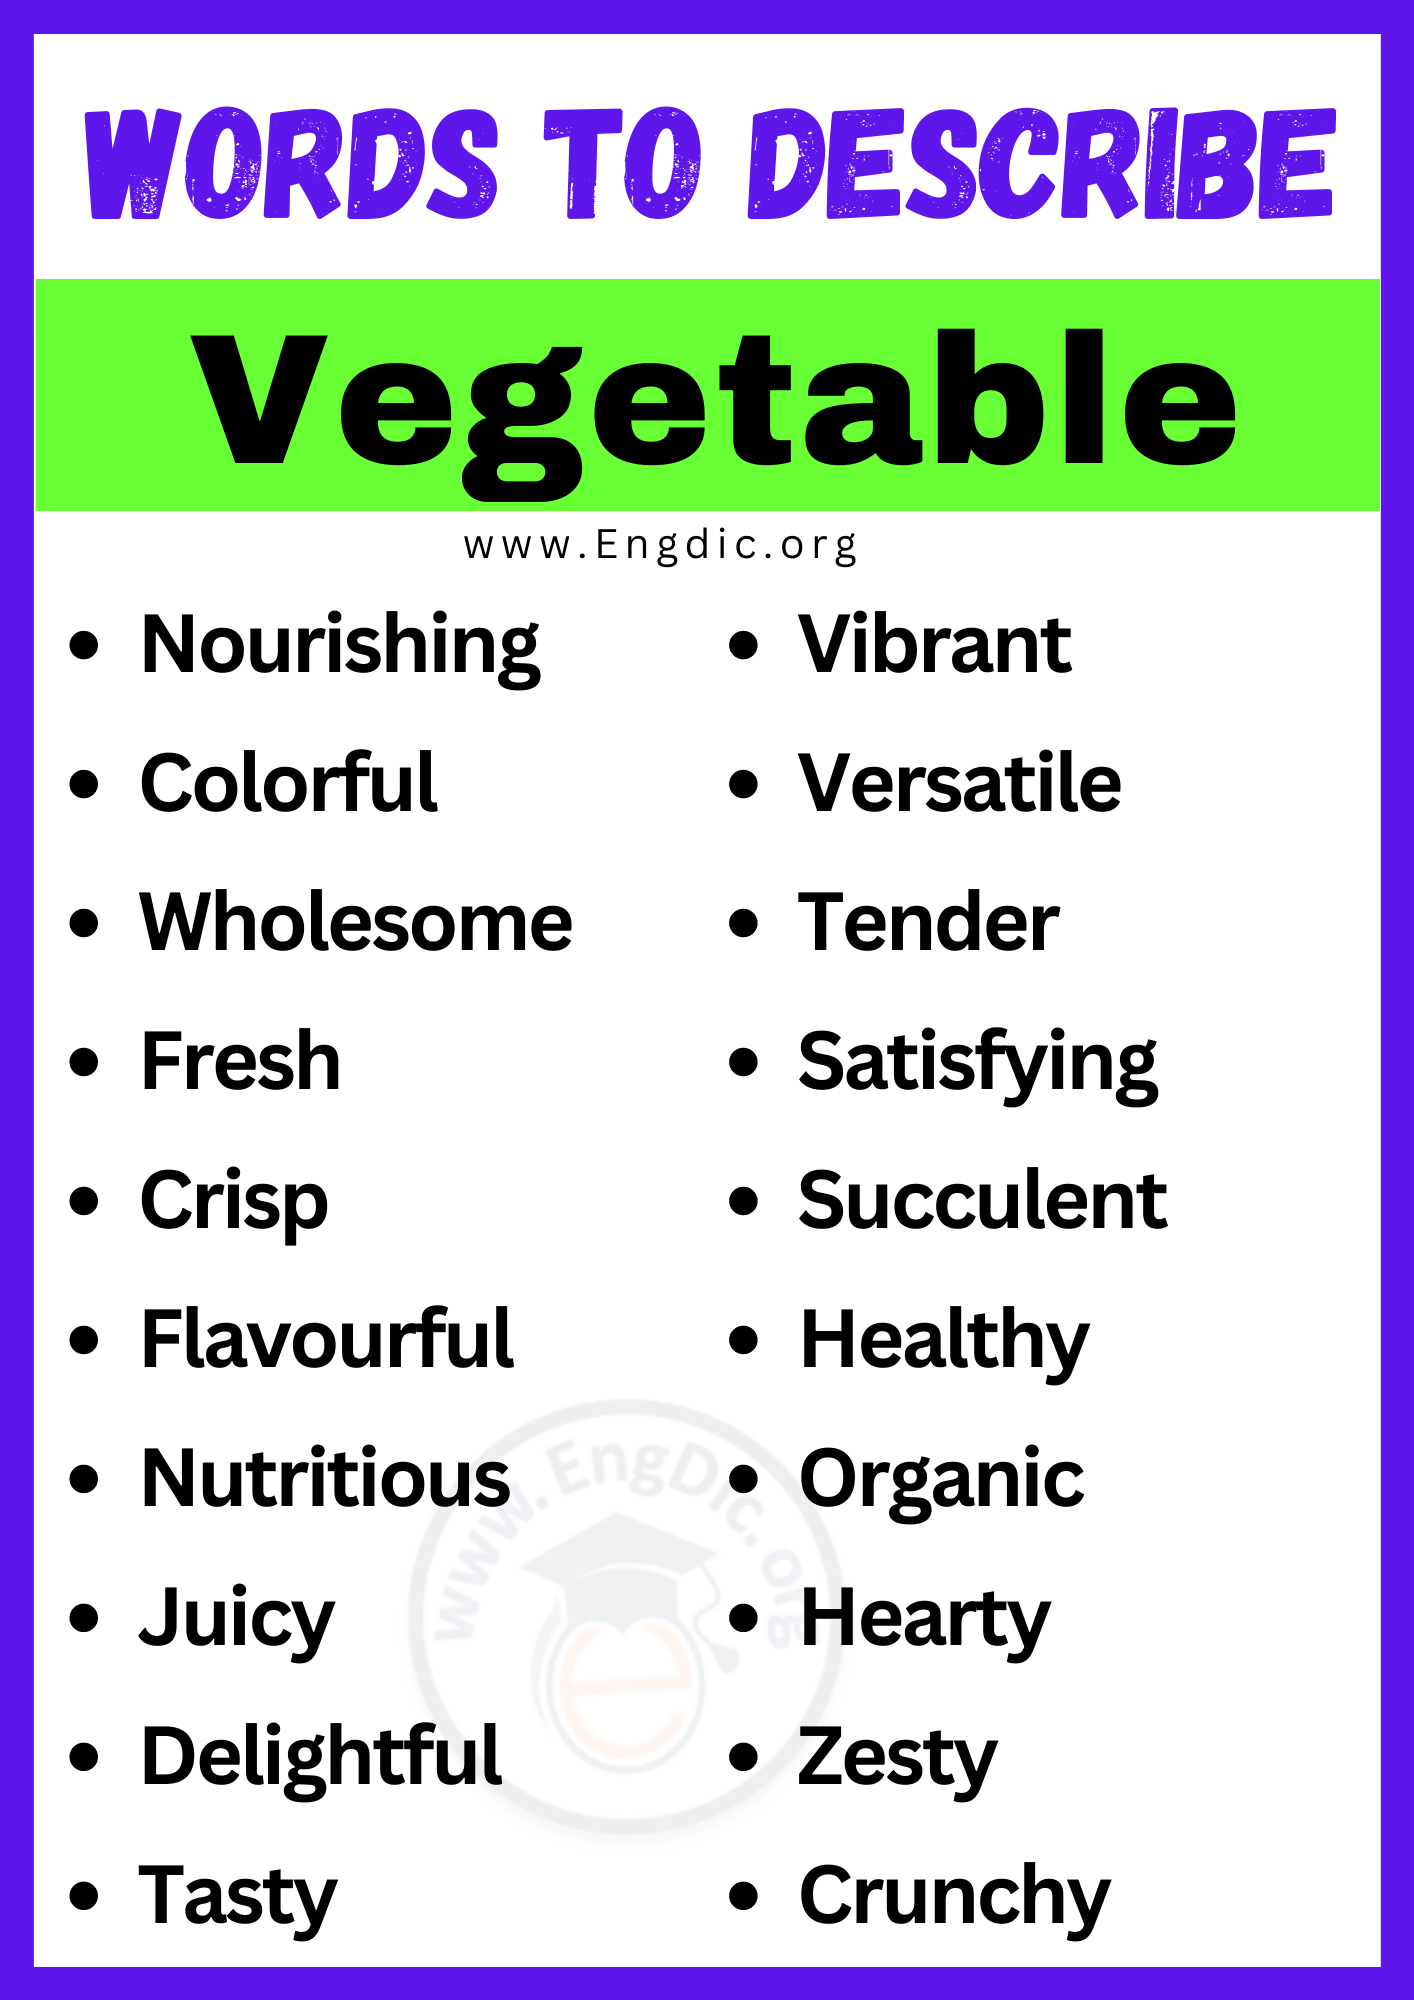 Words to Describe Vegetable